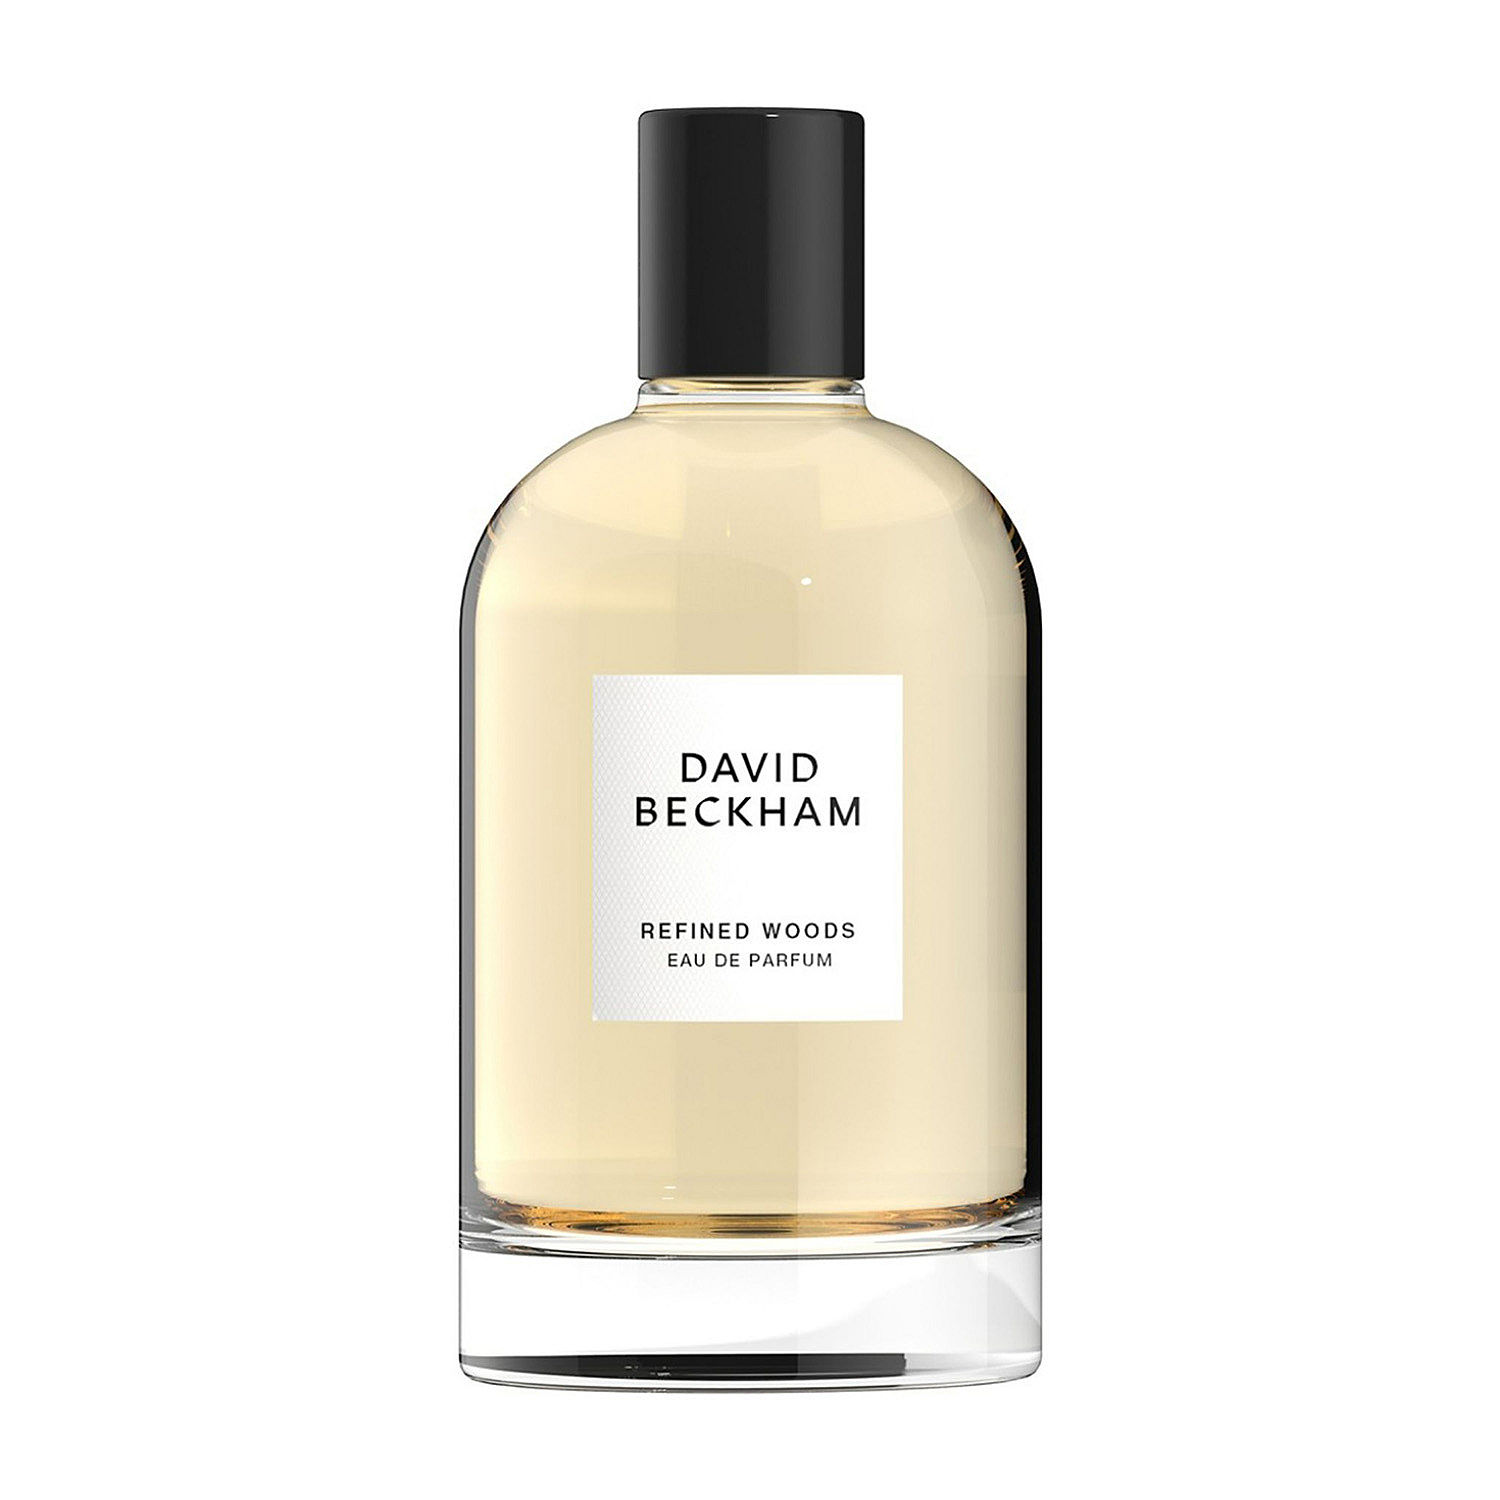 a bottle of david beckham refined woods perfume